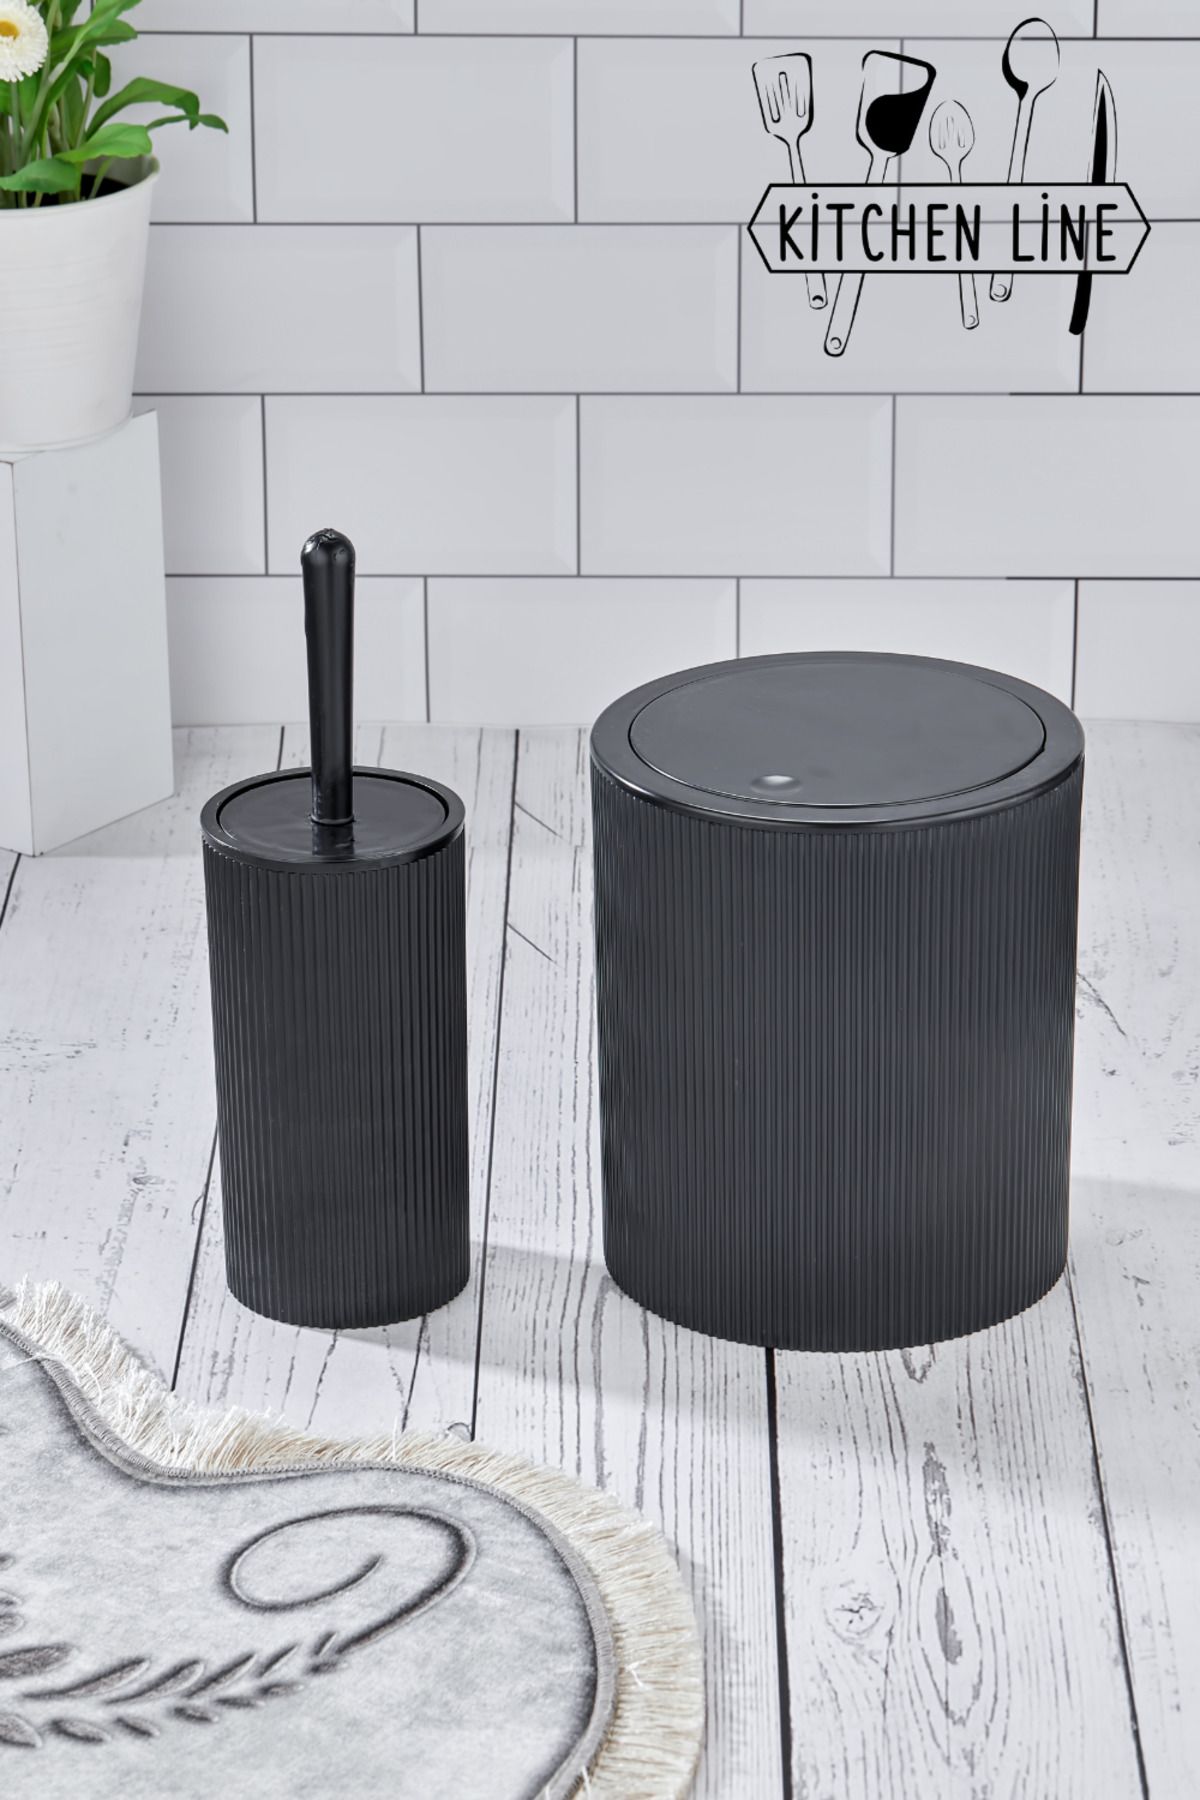 B.A.Y.NUVOLA Yuvarlak Çöp Kovası & Yuvarlak Tuvalet Fırçası Seti Ikili Banyo Seti Siyah